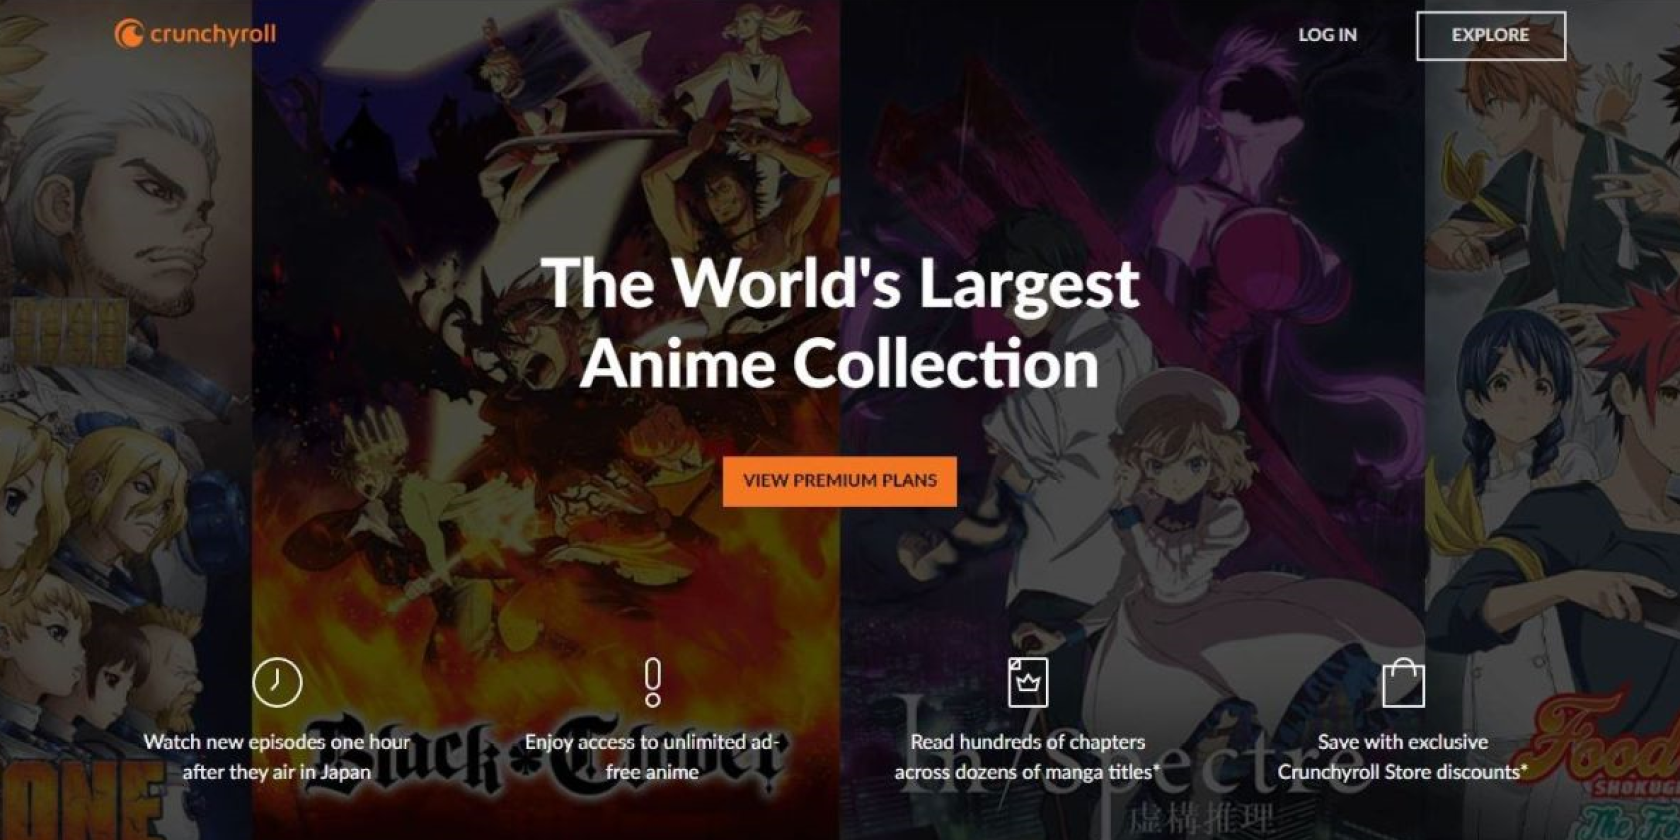 Where to Watch Tomodachi Game: Netflix, Funimation, Crunchyroll or